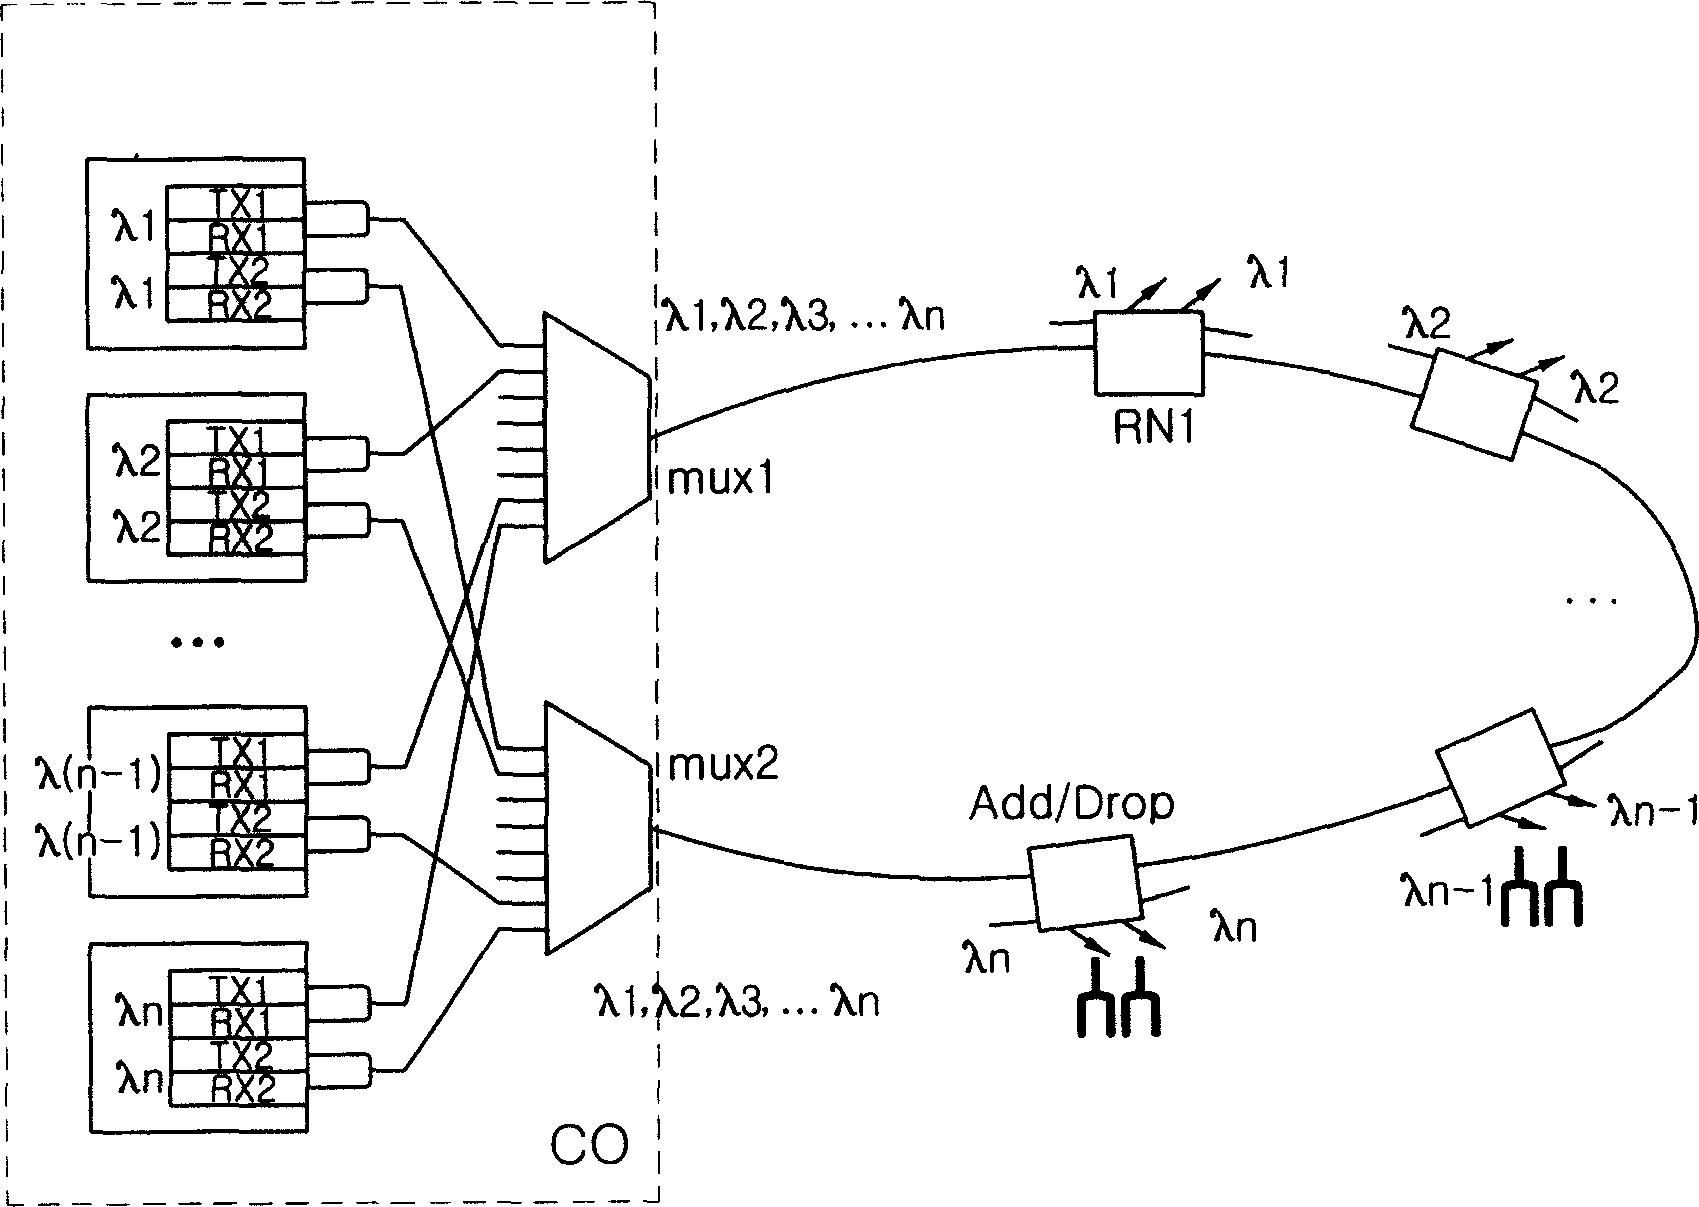 Exchange medium convertor and passive optical network using same